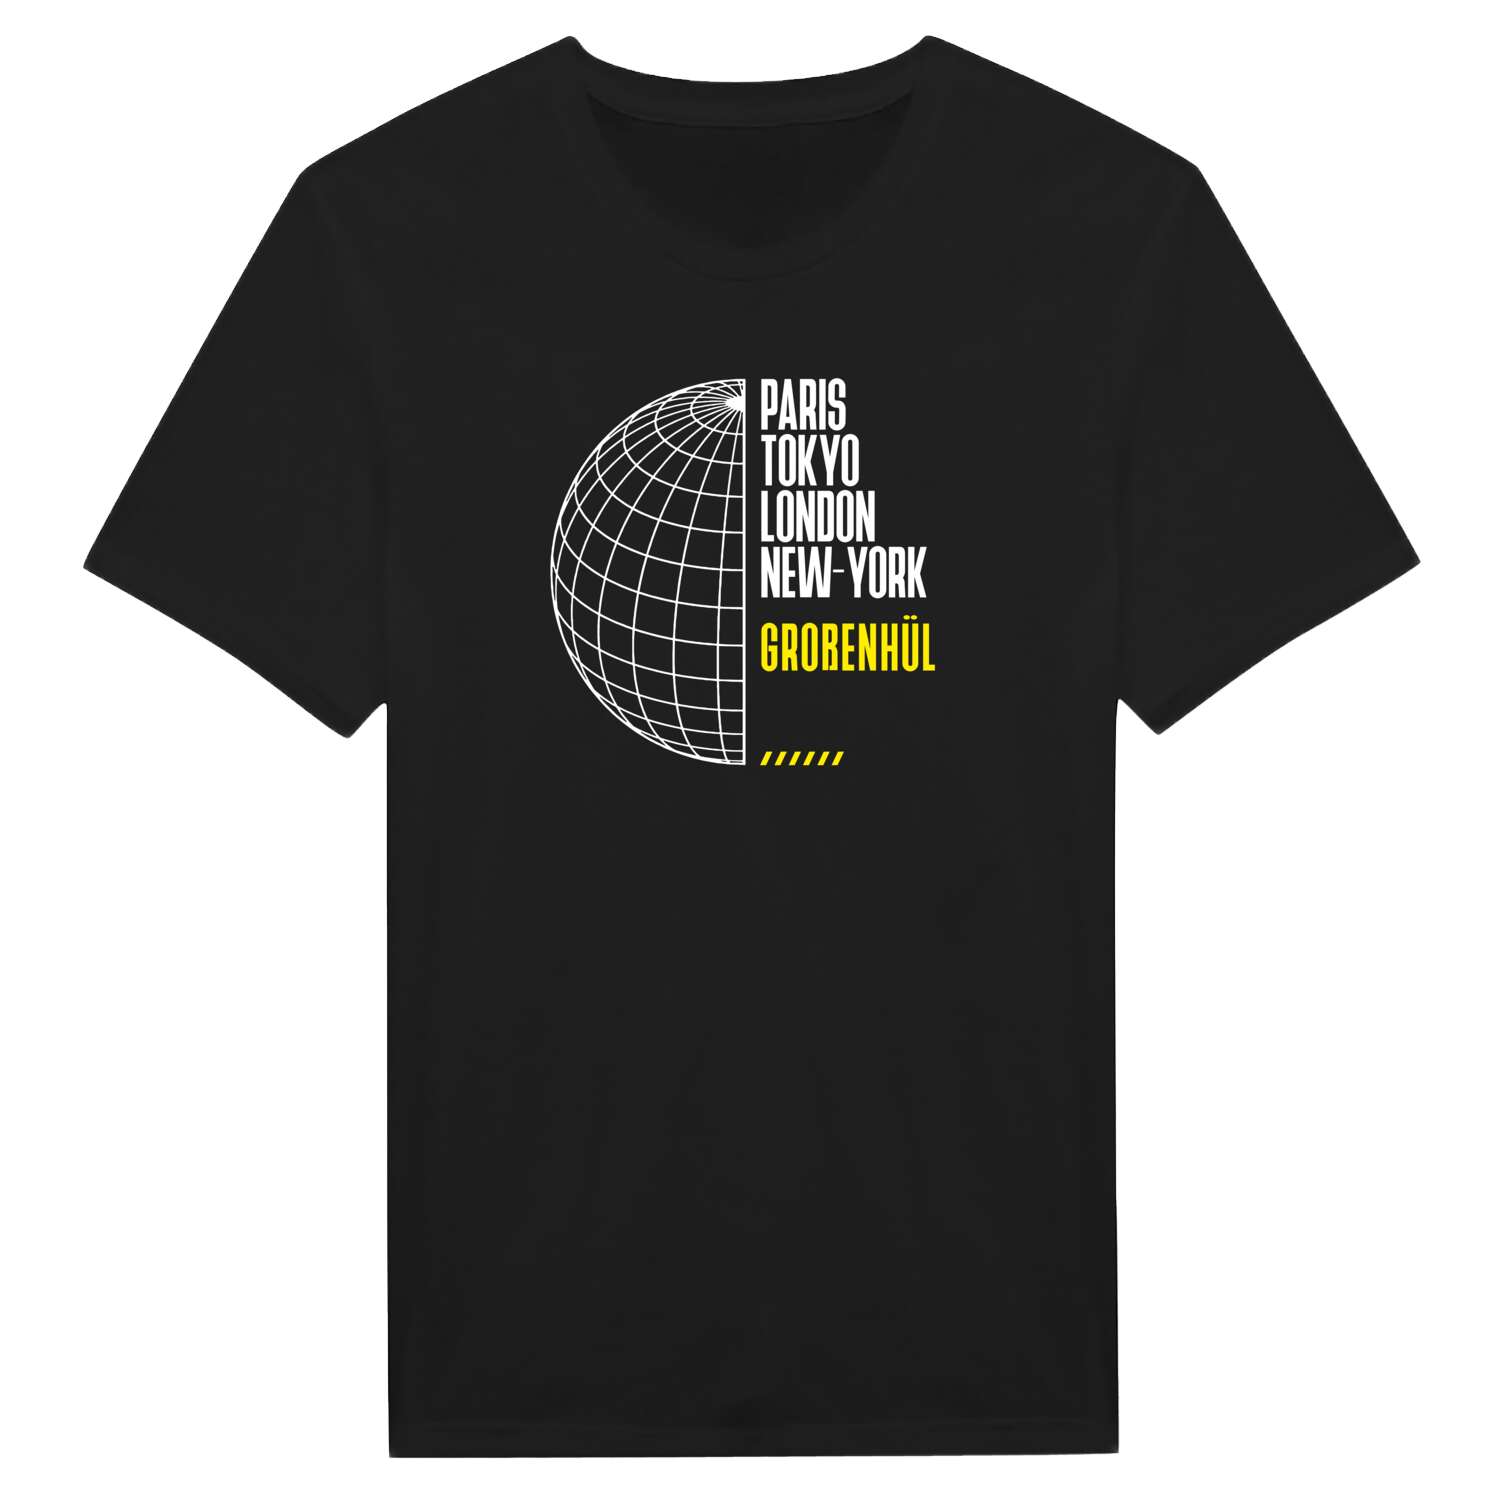 Großenhül T-Shirt »Paris Tokyo London«